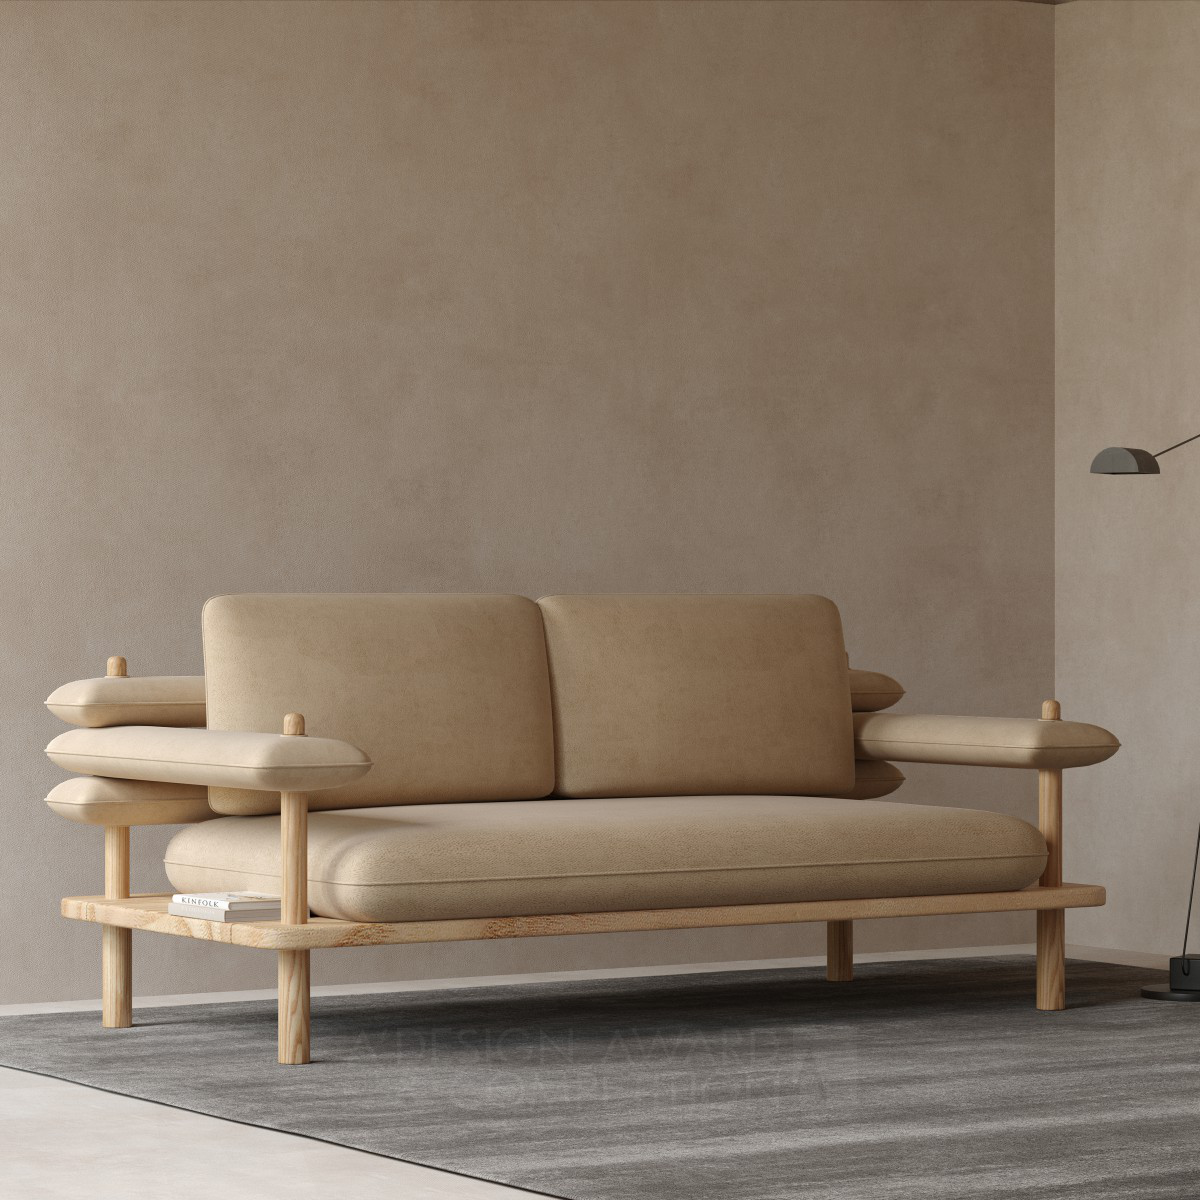 Yuqi Wang wins Silver at the prestigious A' Furniture Design Award with Hanoi Detachable Sofa.